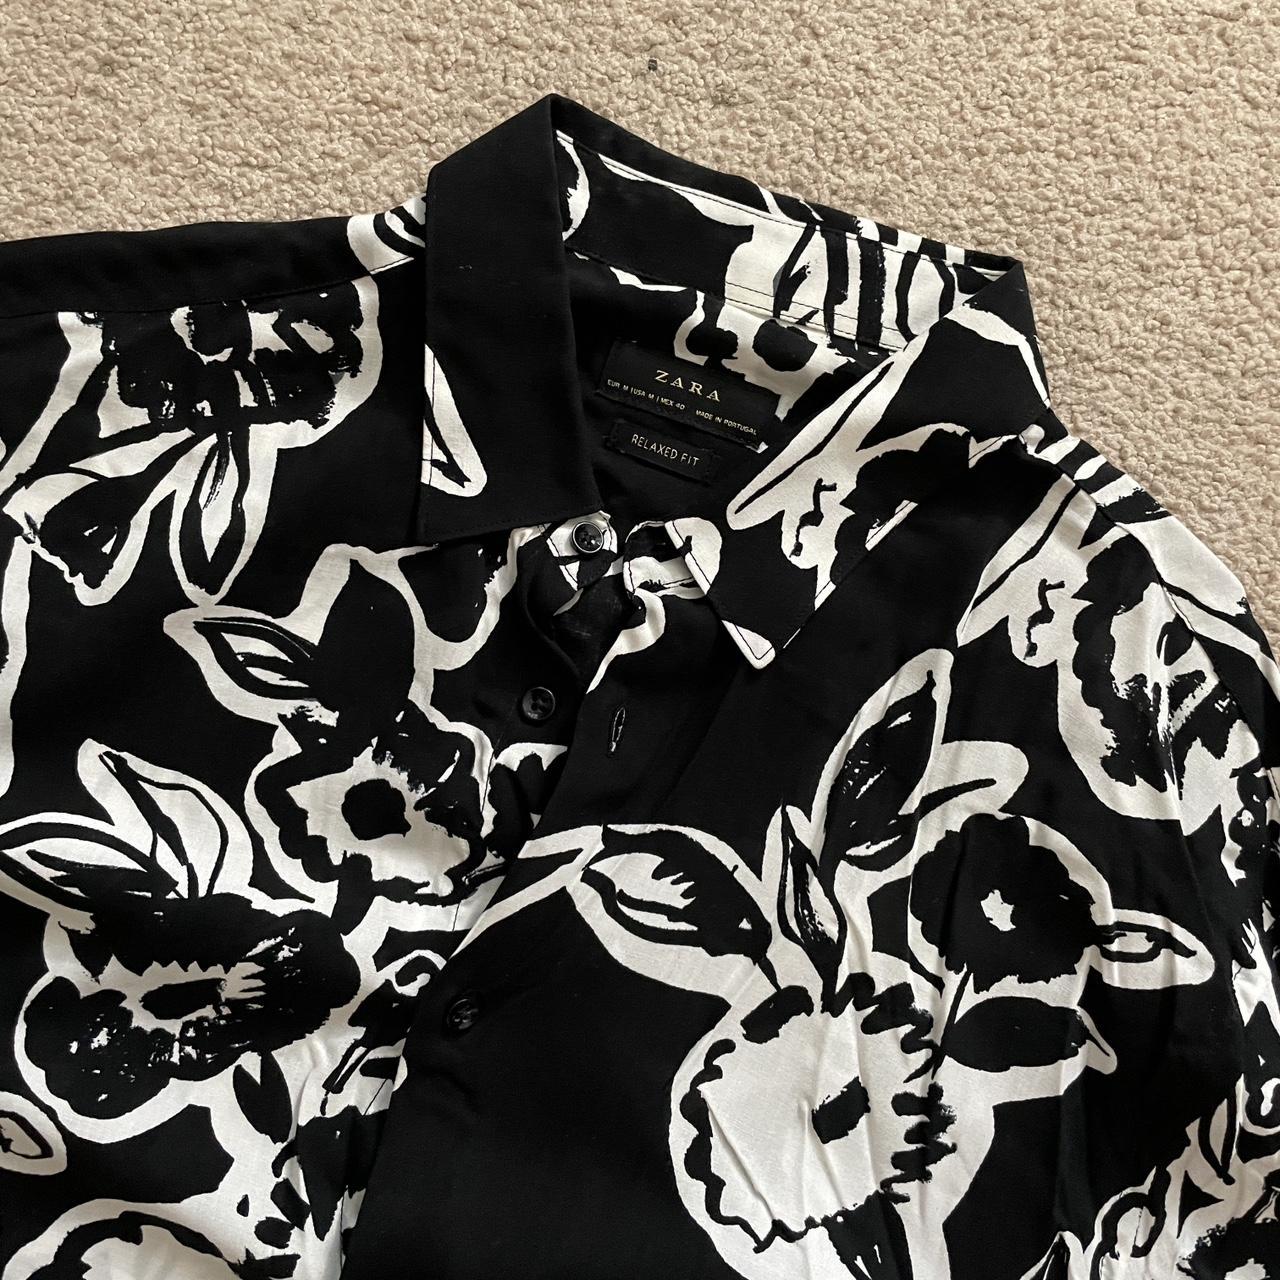 Zara floral printed black shirt sz Medium. Rare... - Depop